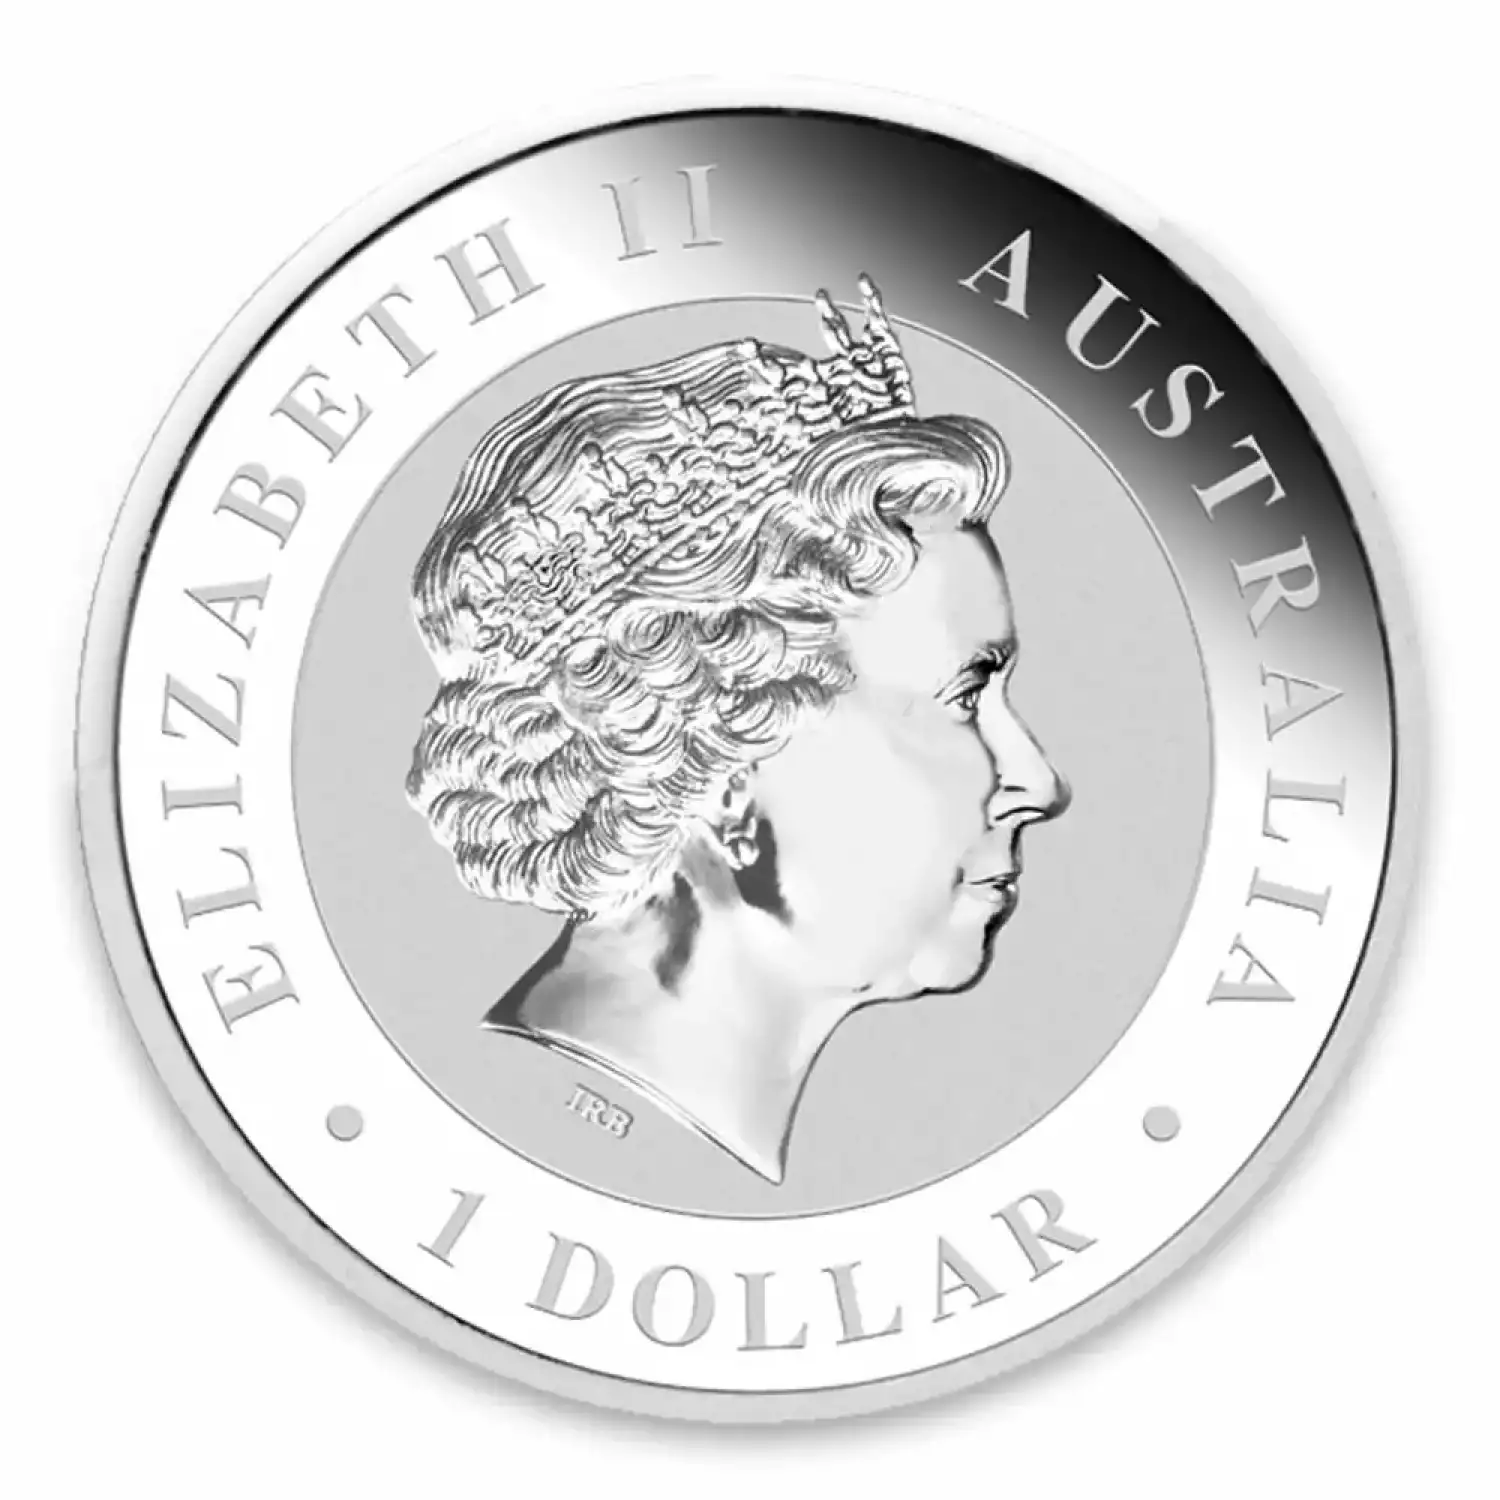 2012 1oz Australian Perth Mint Silver Koala - Bear Privy Mark (2)